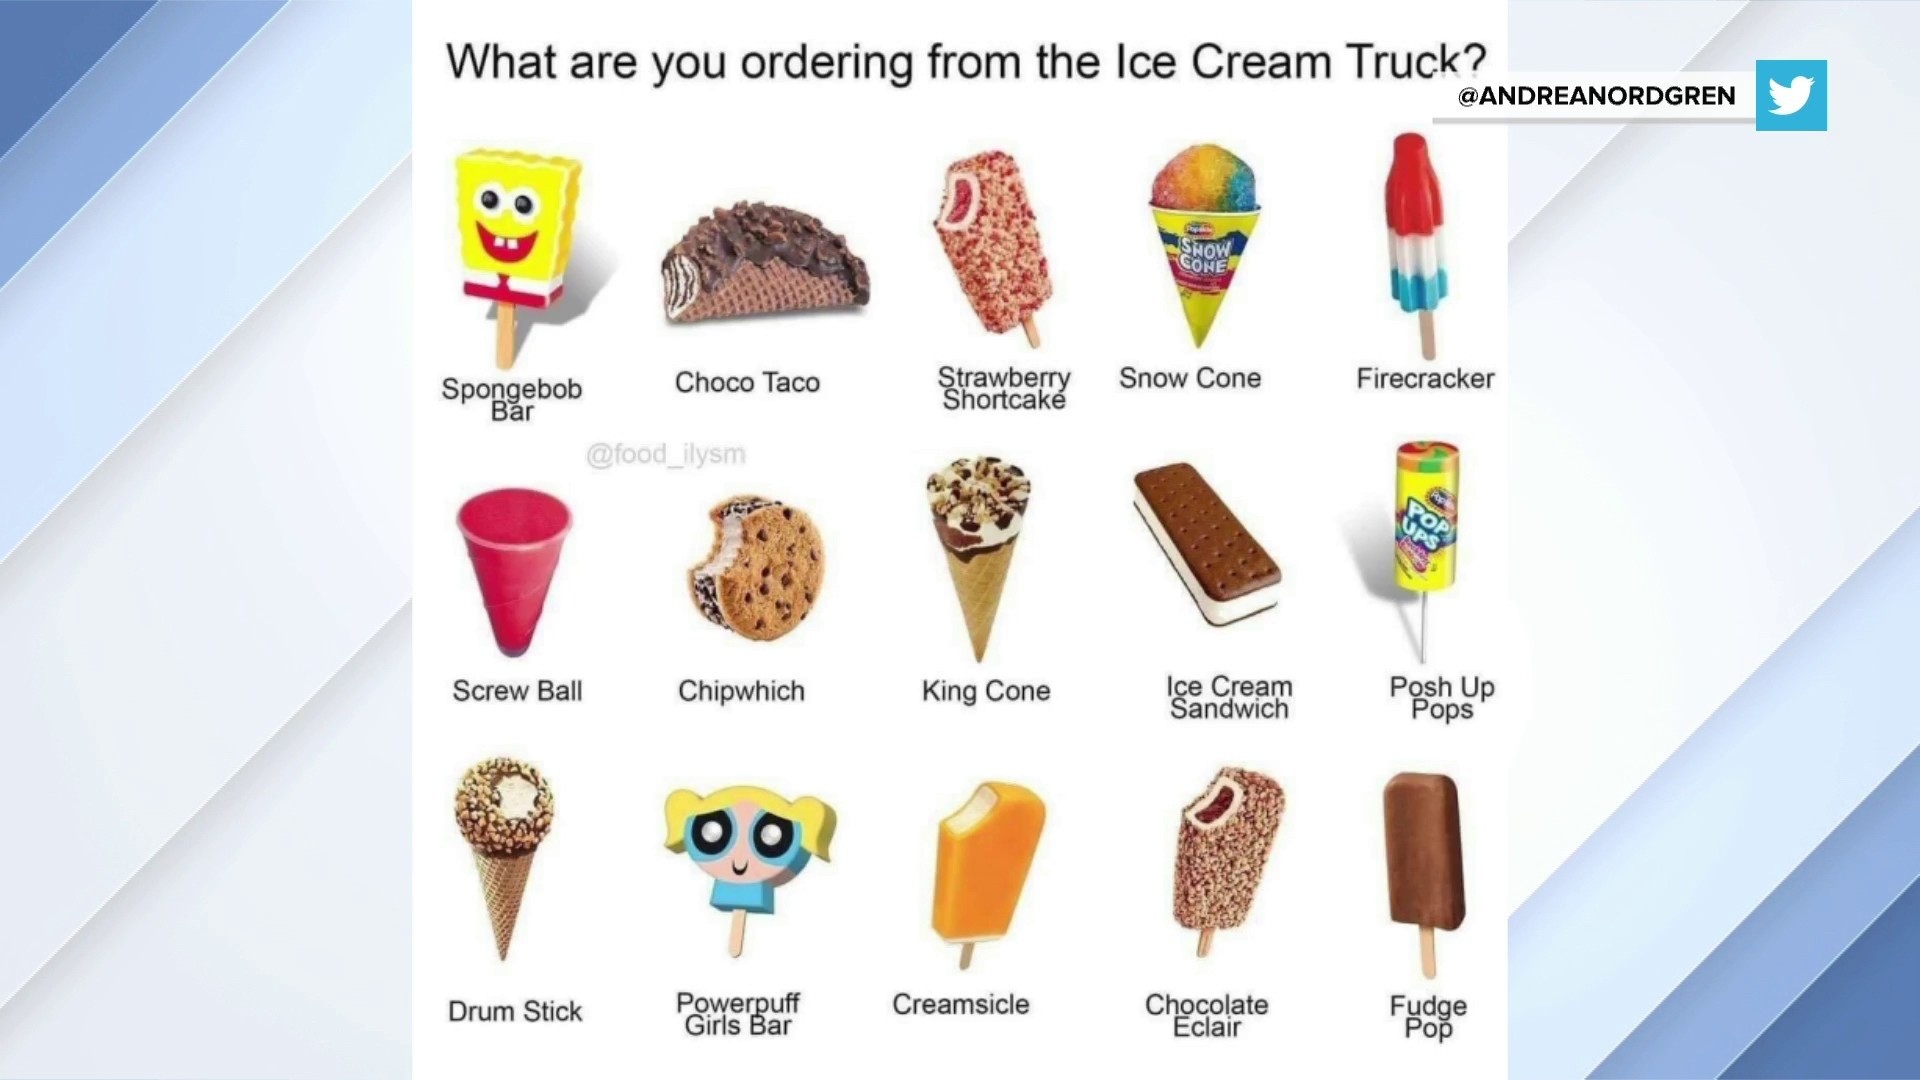 Bomb Pop Or Taco Choco Viral Post Ignites Debate About Ice Cream Truck Treats